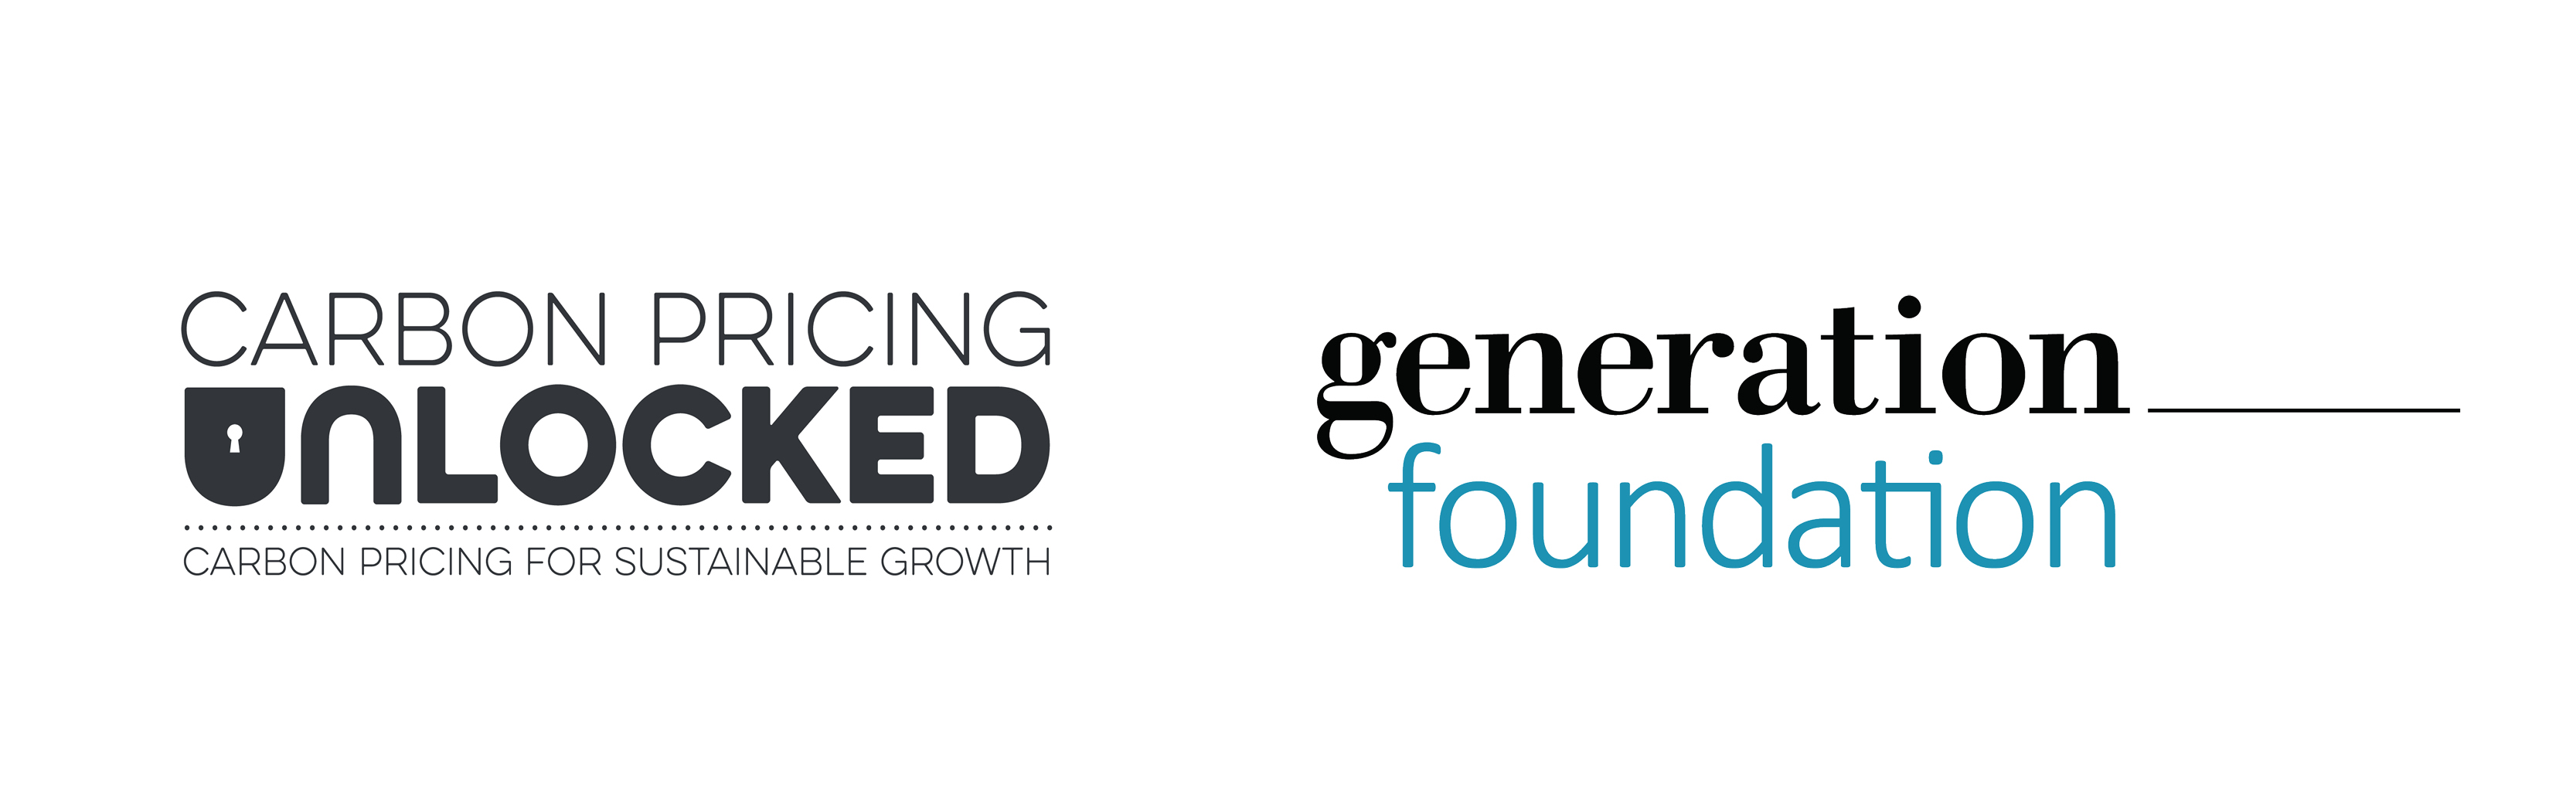 Carbon-pricing-unlocked-generation-foundation-logos